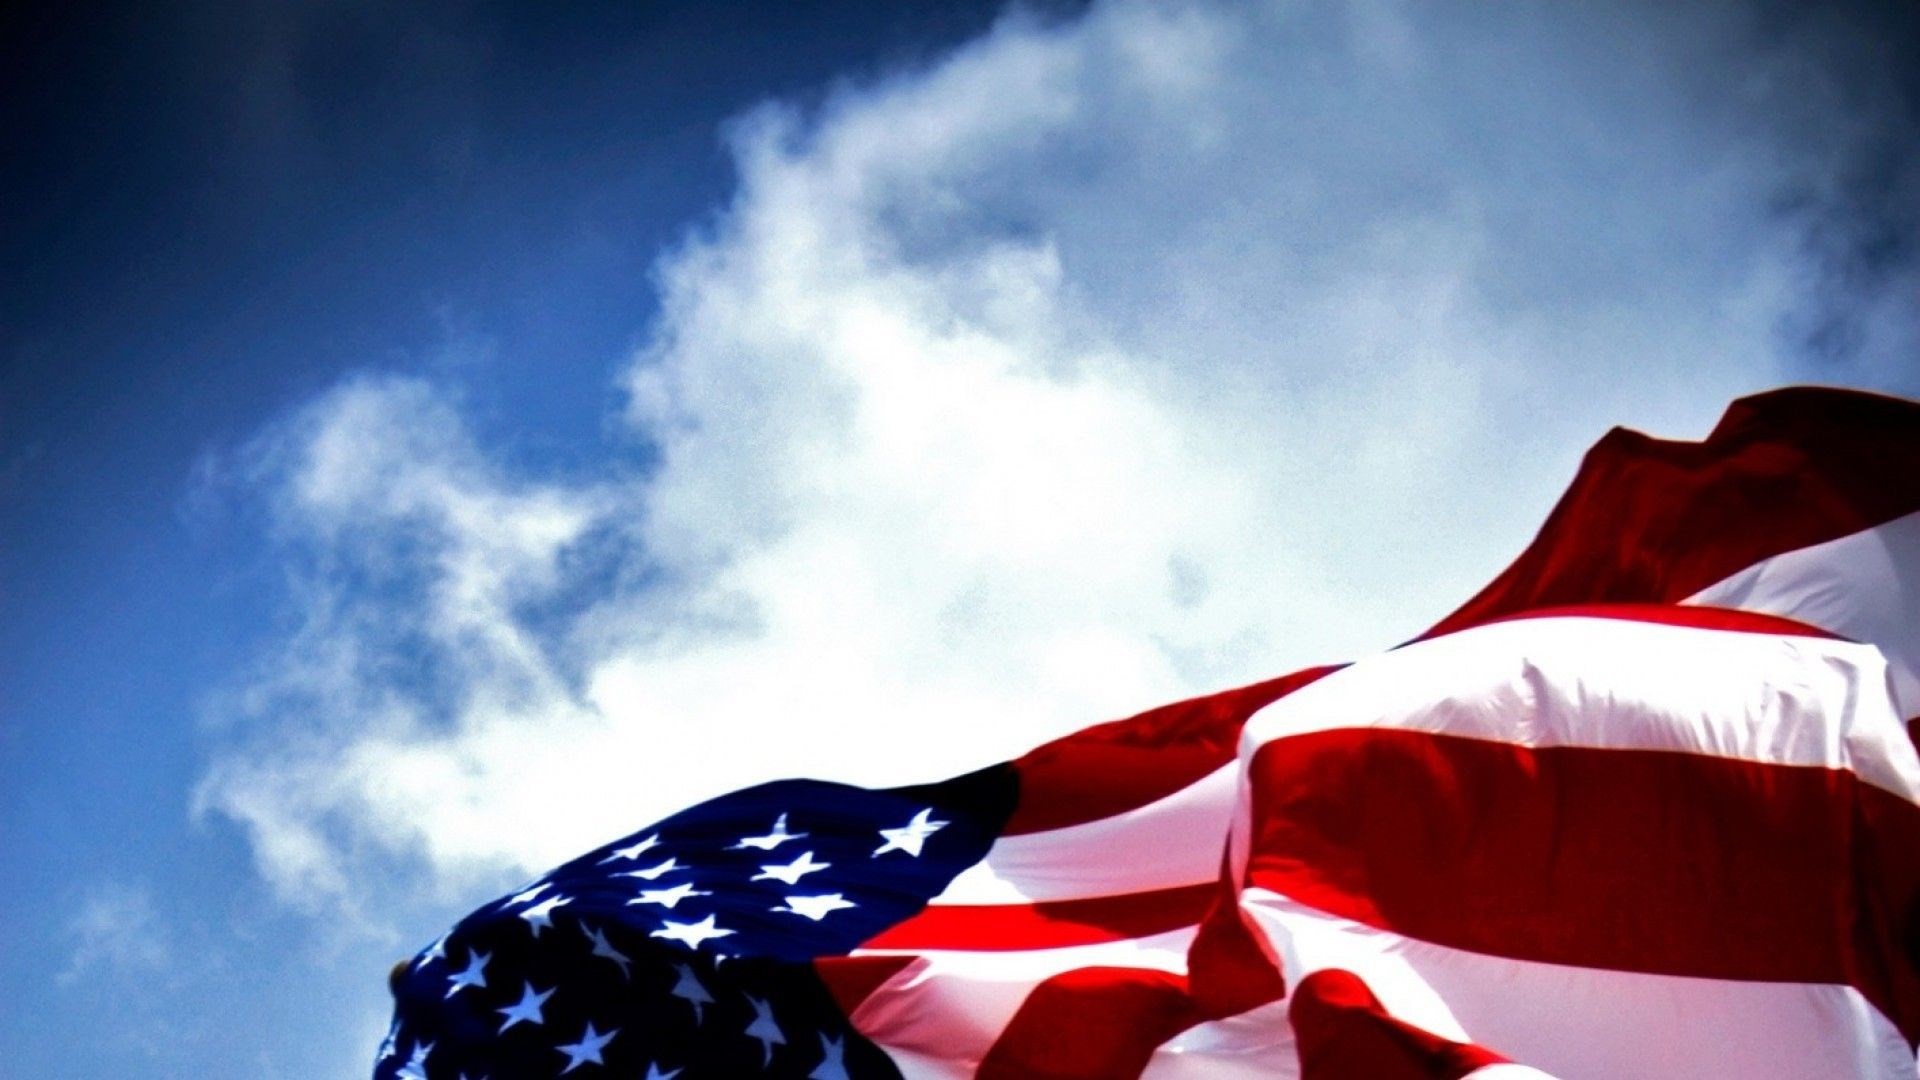 American flag wallpaper pack 1080p hd